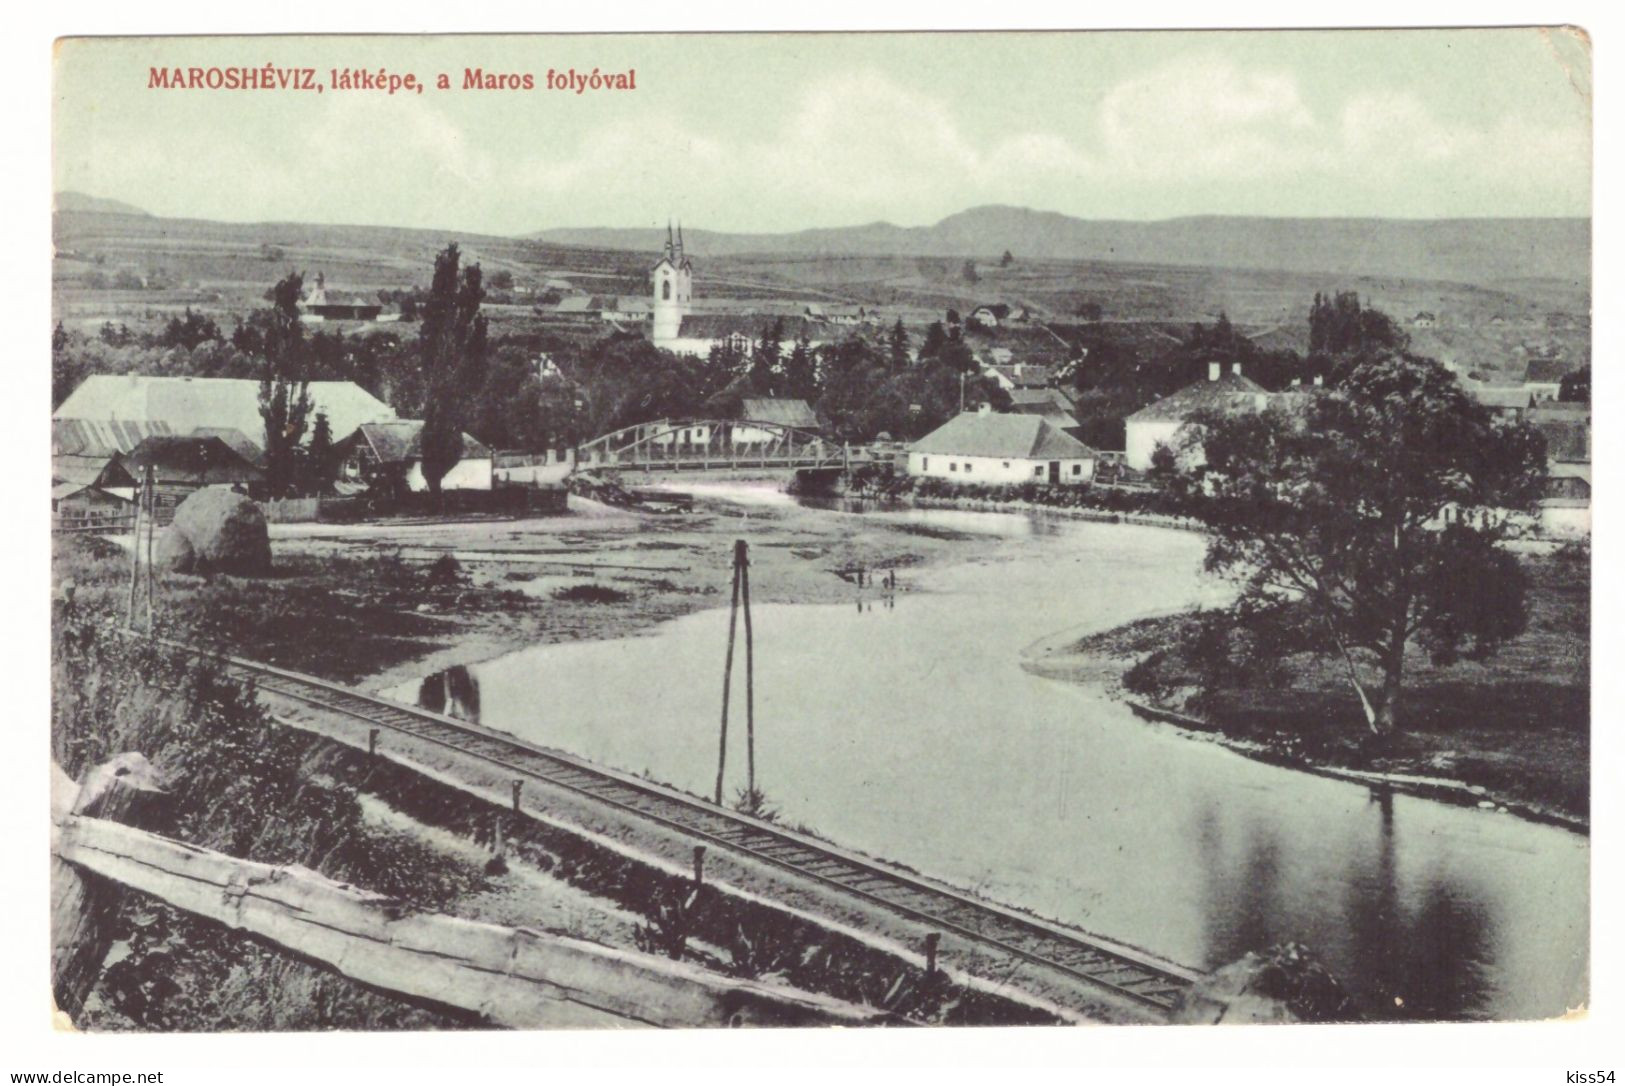 RO 91 - 18375 TOPLITA, Harghita, Railway, Bridge, Panorama, Romania - Old Postcard - Unused - Roumanie